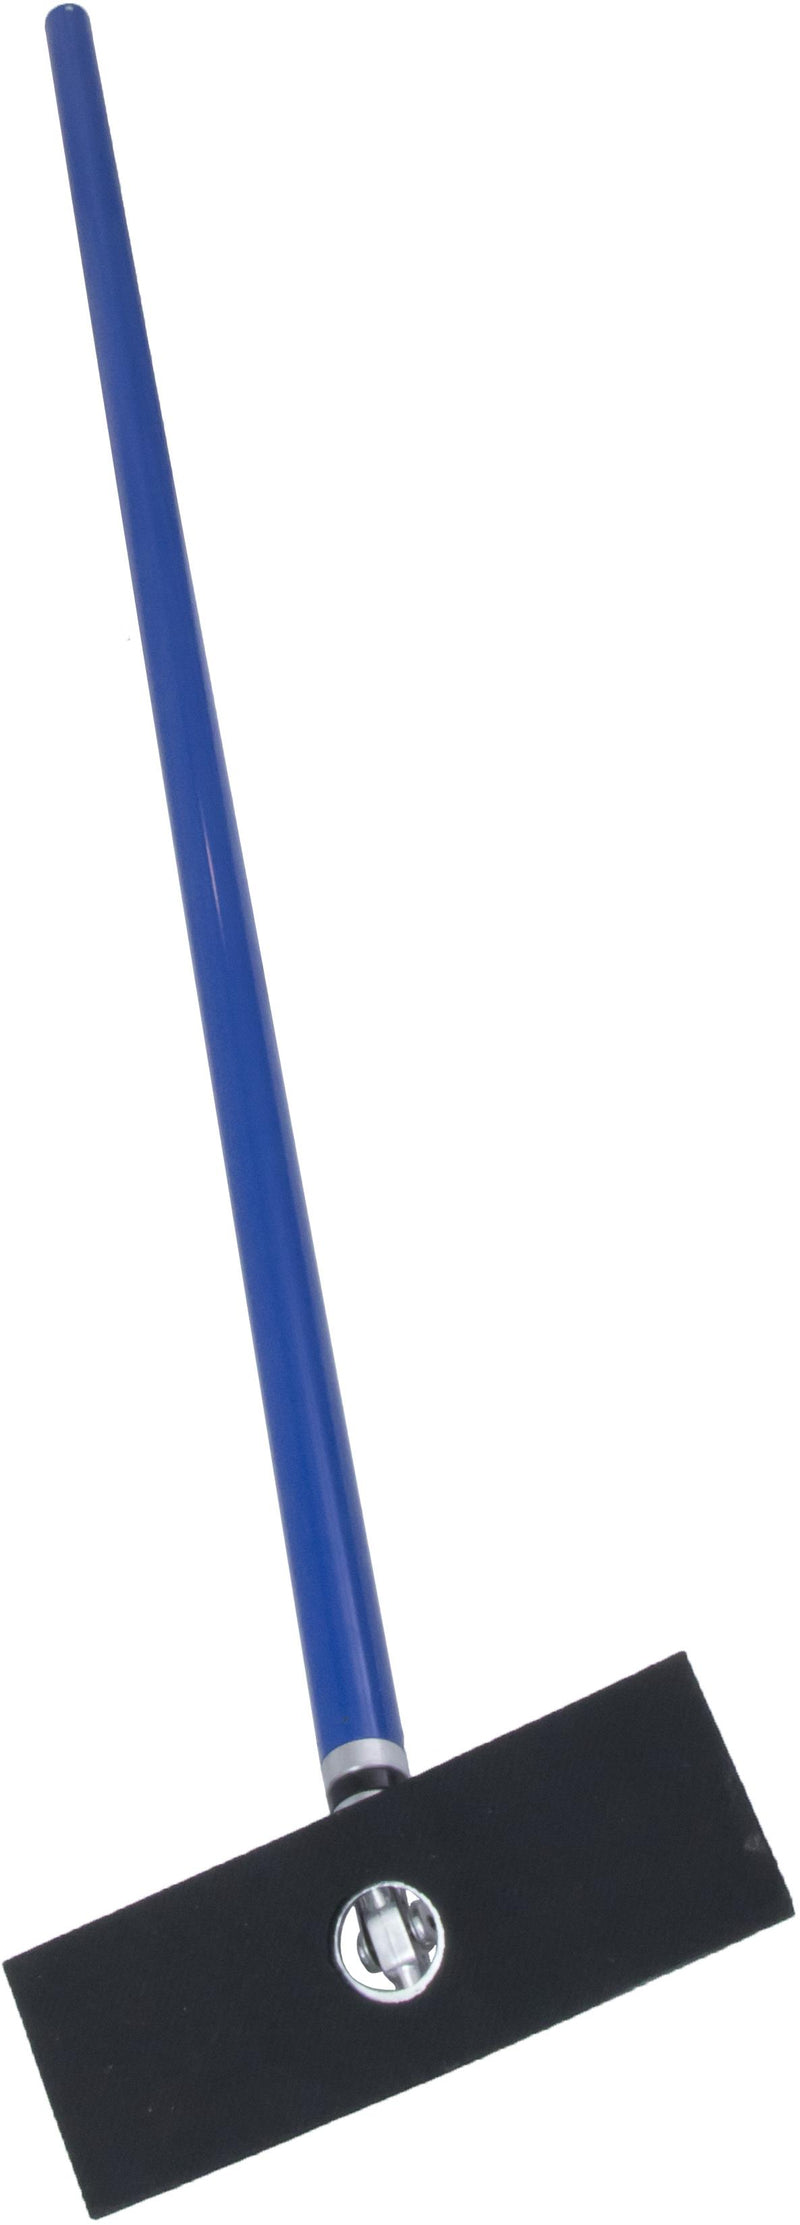 Marshalltown Pole Sander with Fixed Handle